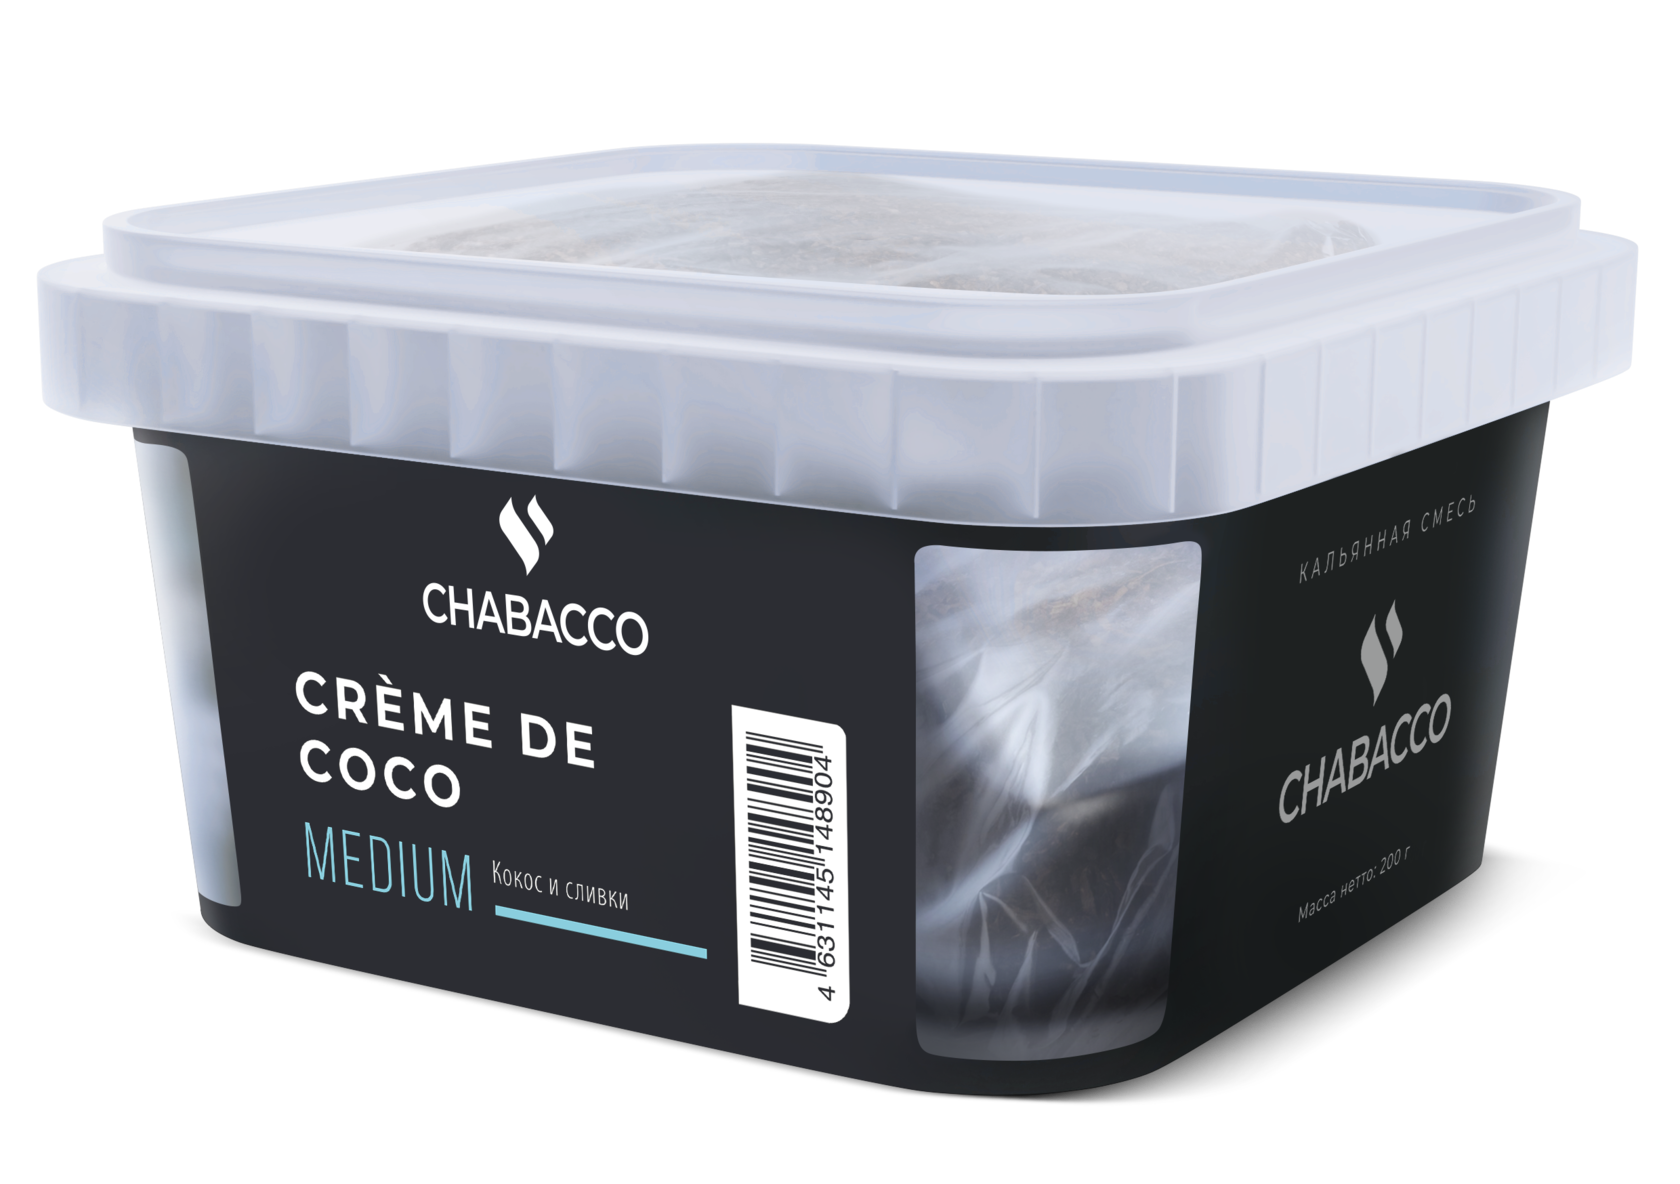 Chabacco - Medium - CREME DE COCO - 200 g